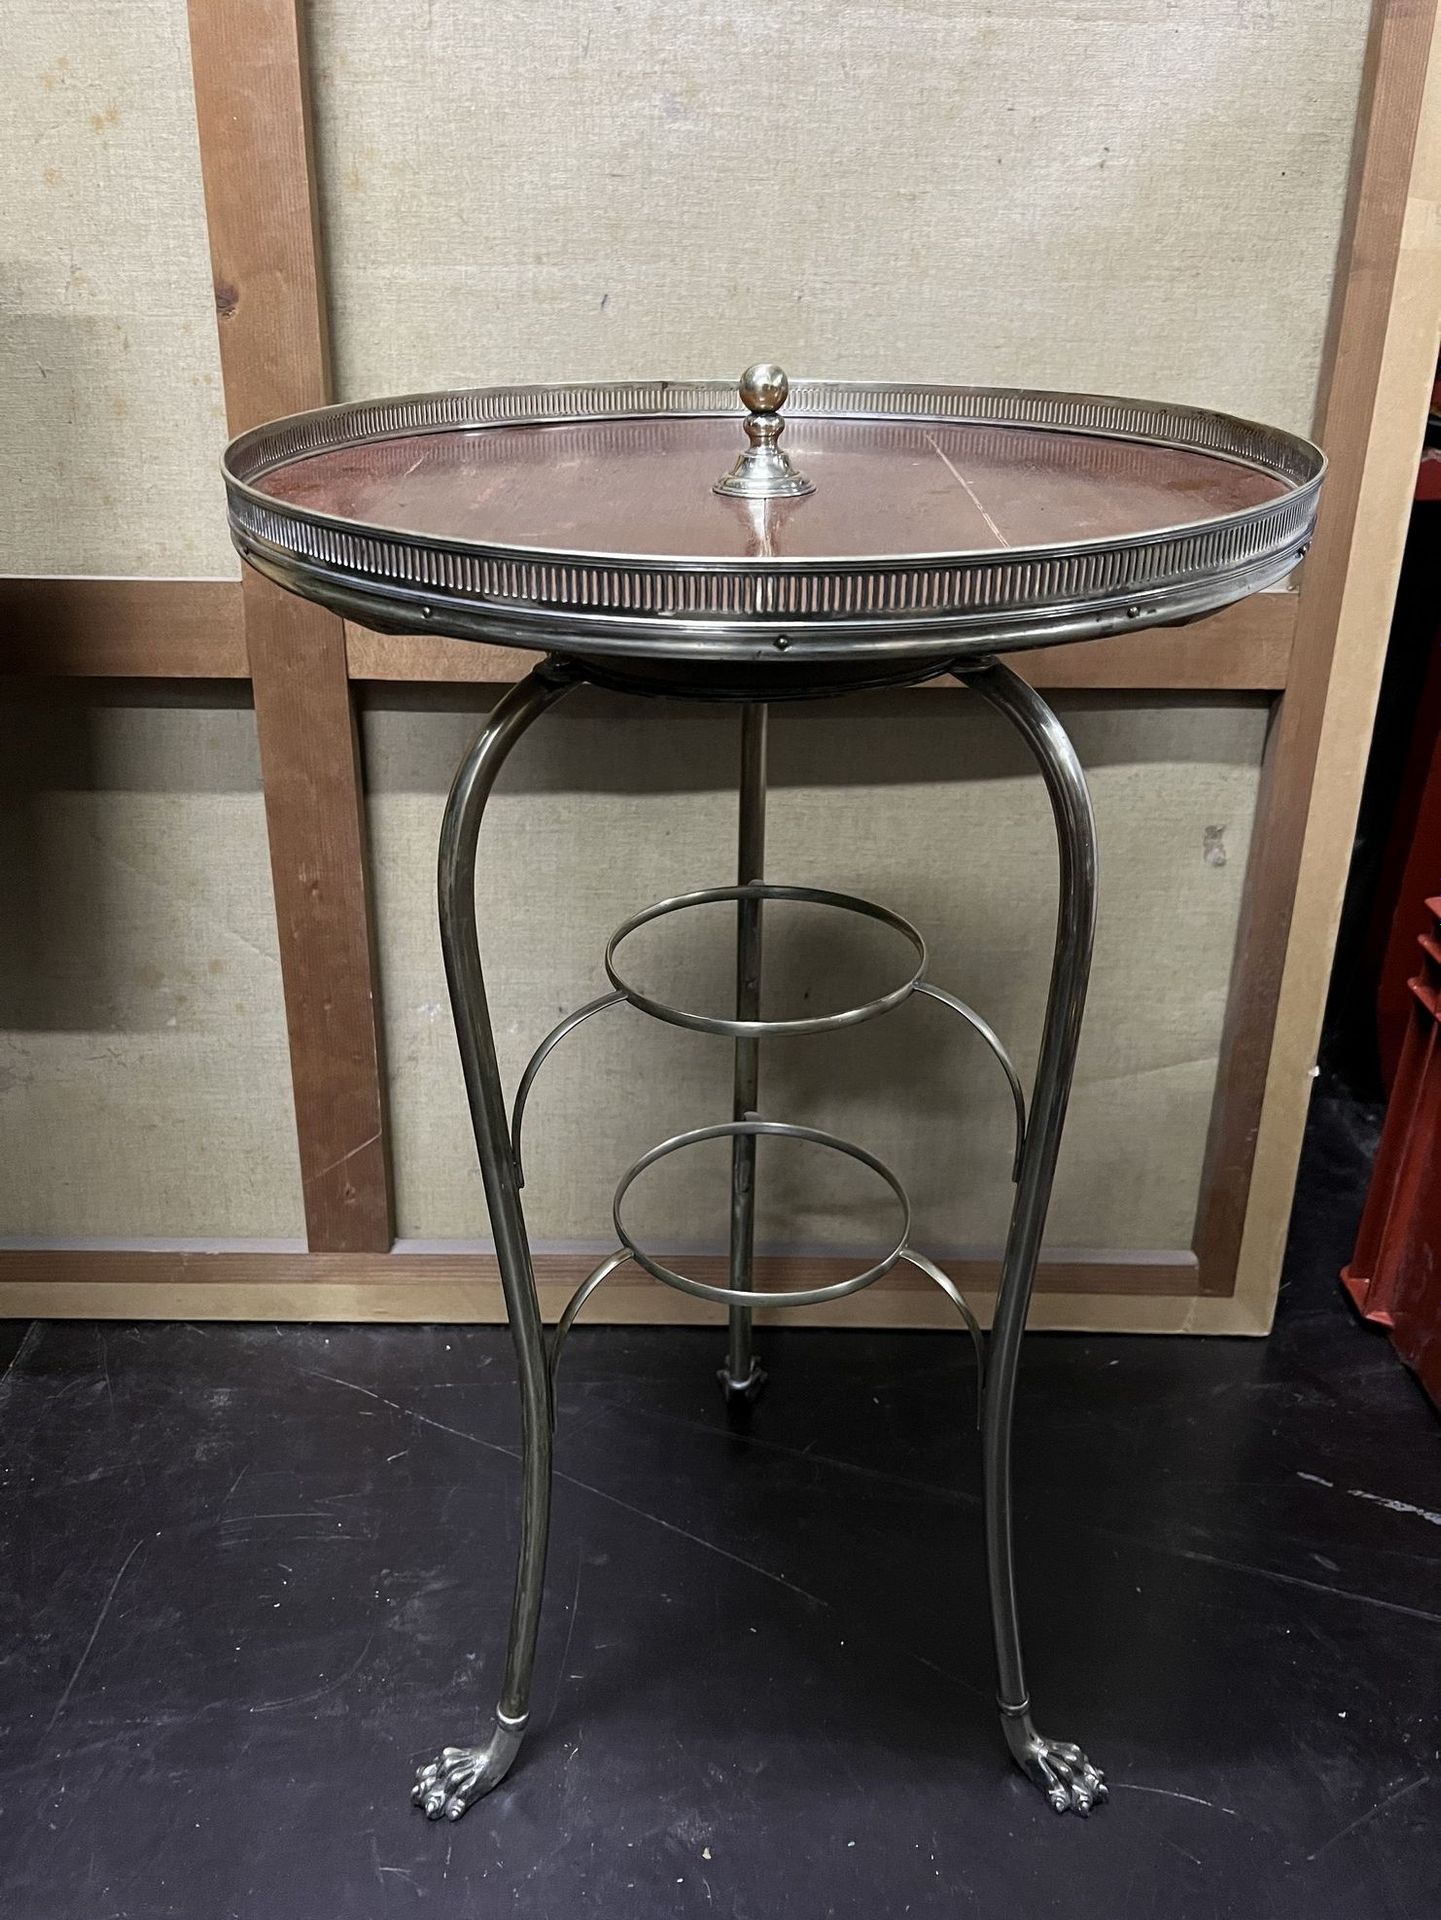 Null 镀铬的金属基座桌，木质桌面和爪形脚。

高度：76厘米。76厘米；直径45厘米_x000D_。

无目录销售。以最佳价格出售--无底价。